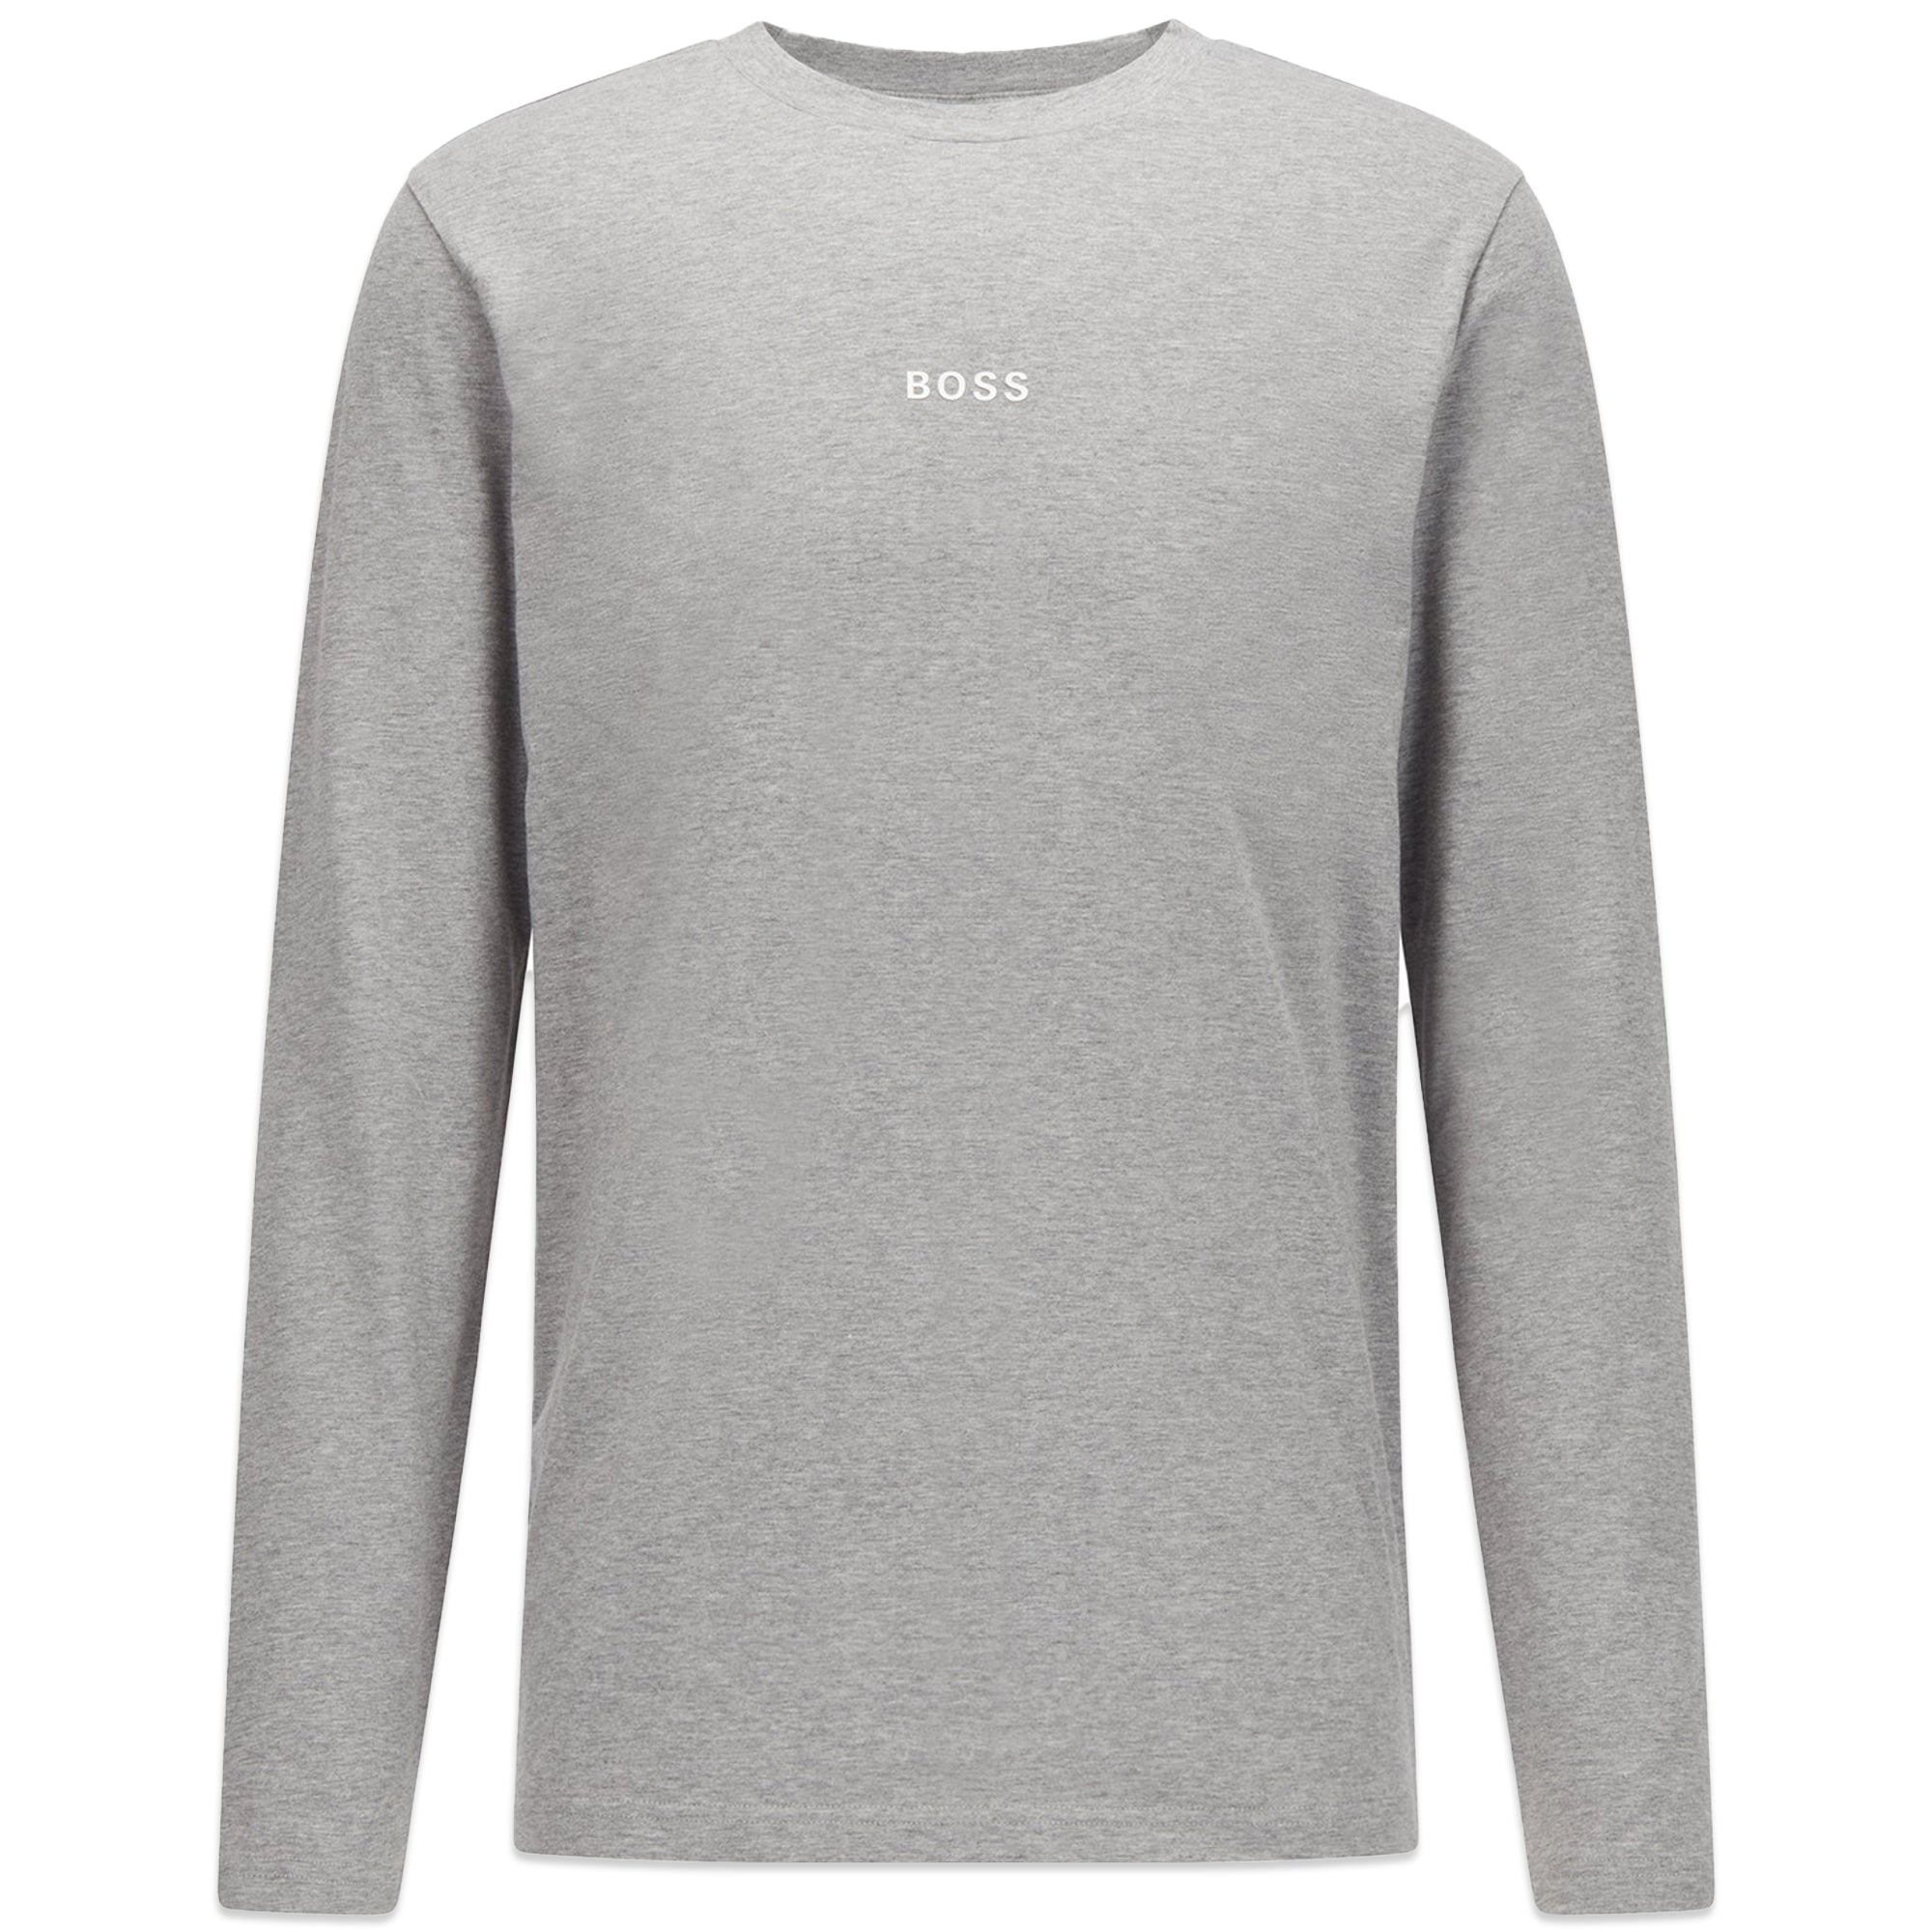 Boss TChark 1 Long Sleeve T-Shirt - Grey